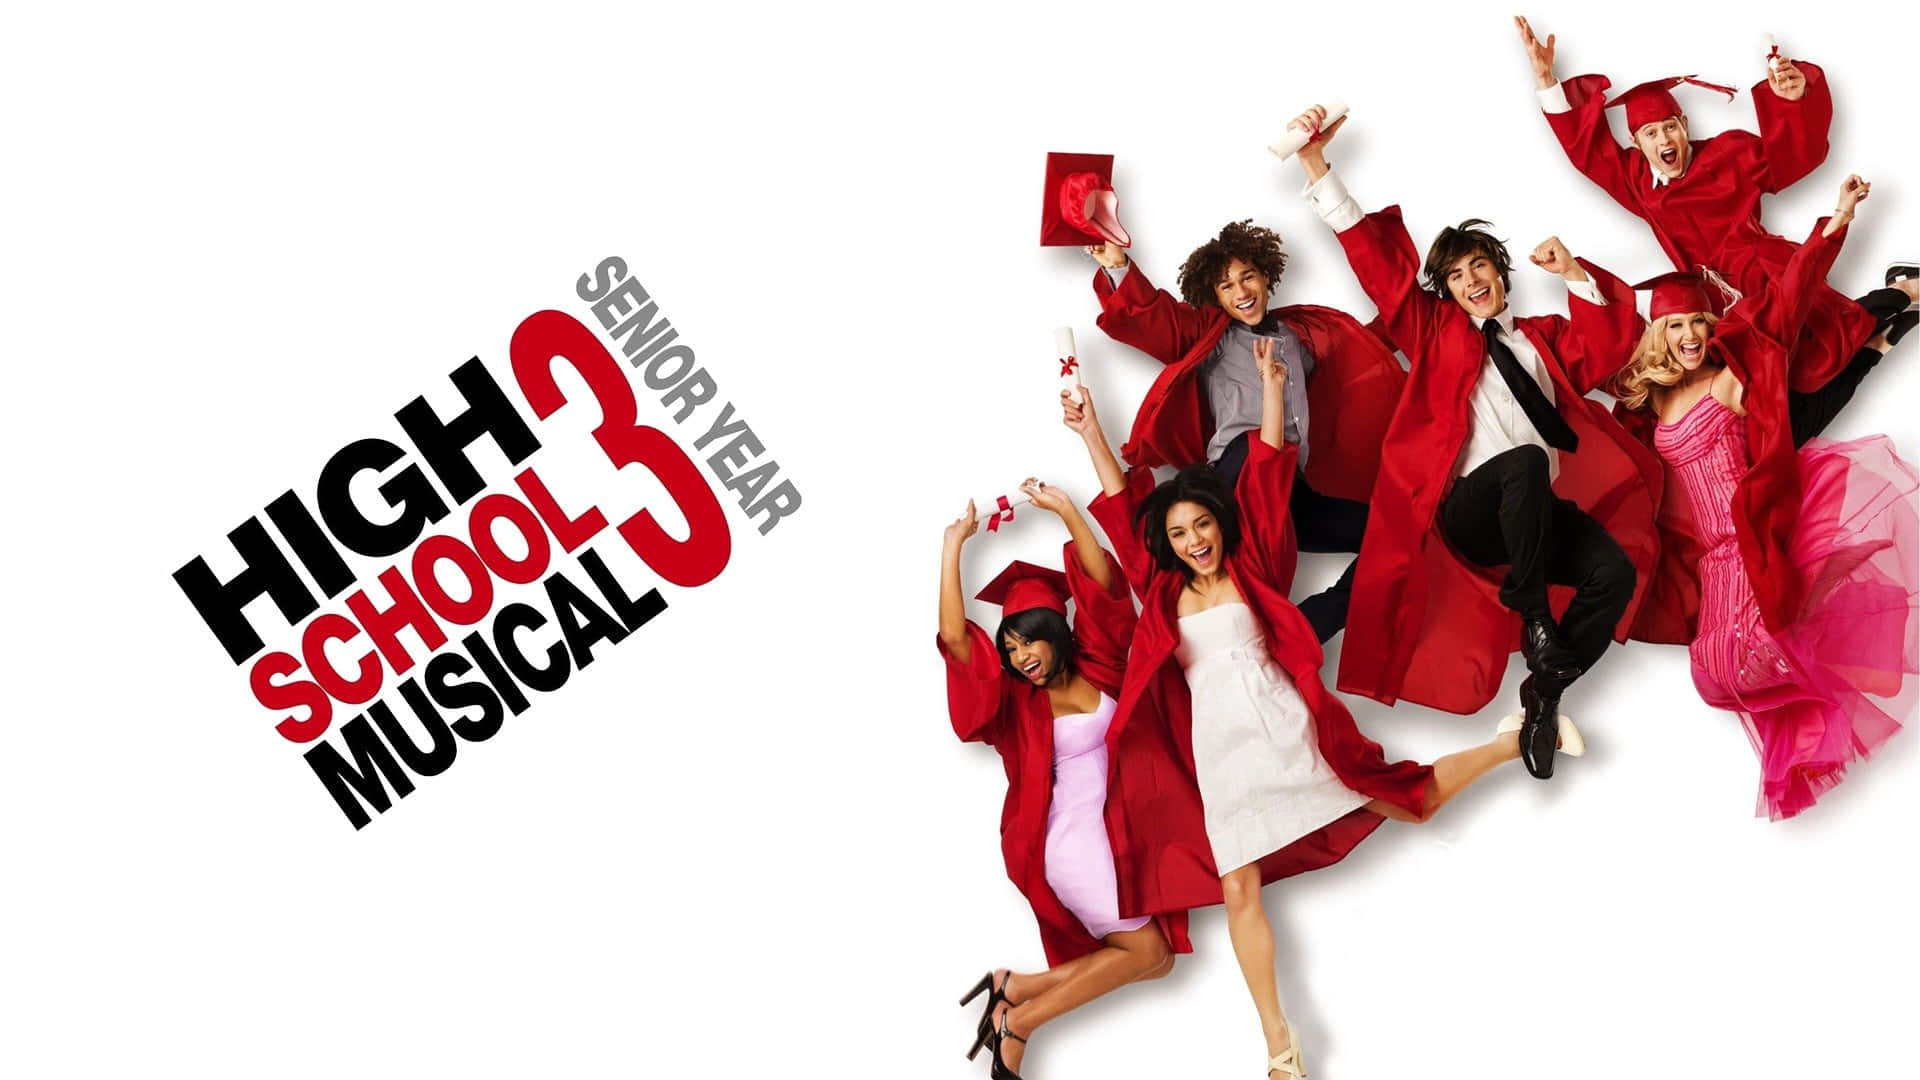 Ilcast Di High School Musical Che Si Posa Insieme In Una Scena Dinamica Di Performance.